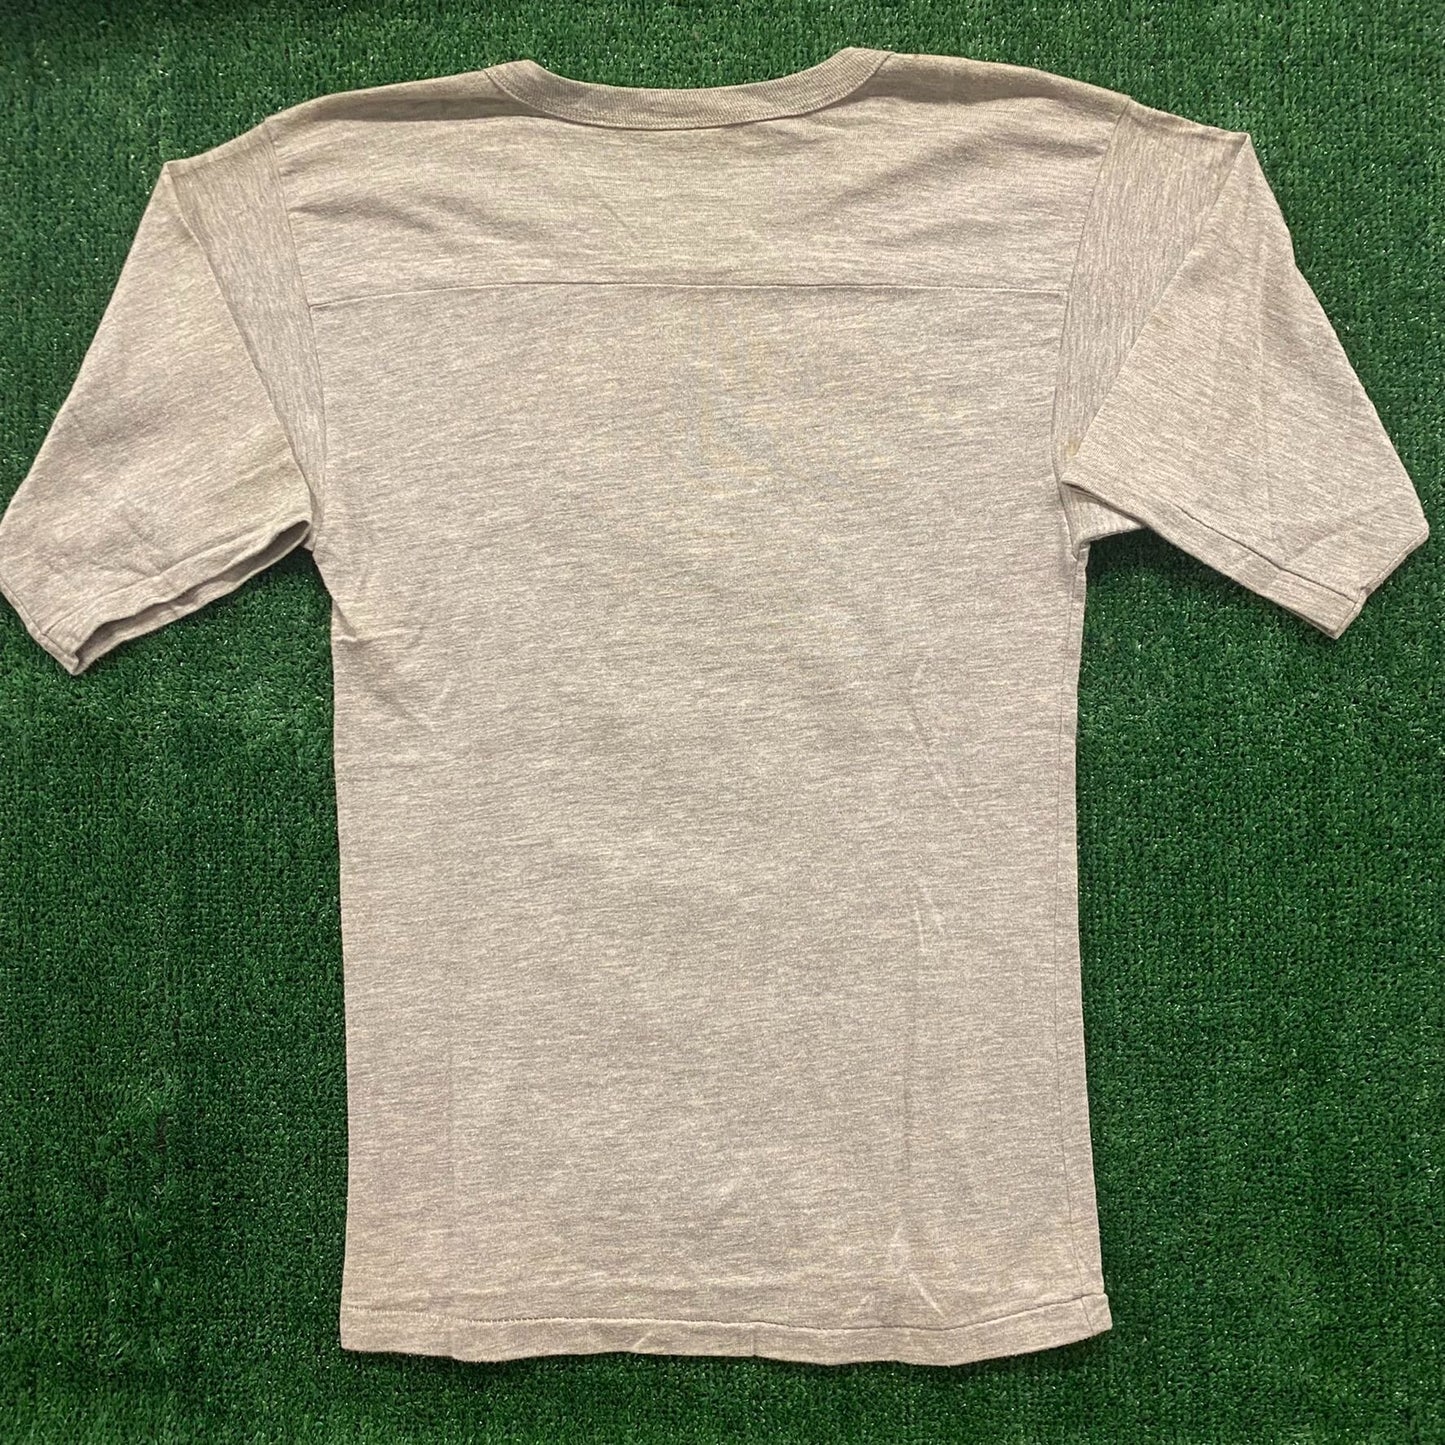 Penn State Football Vintage 90s T-Shirt